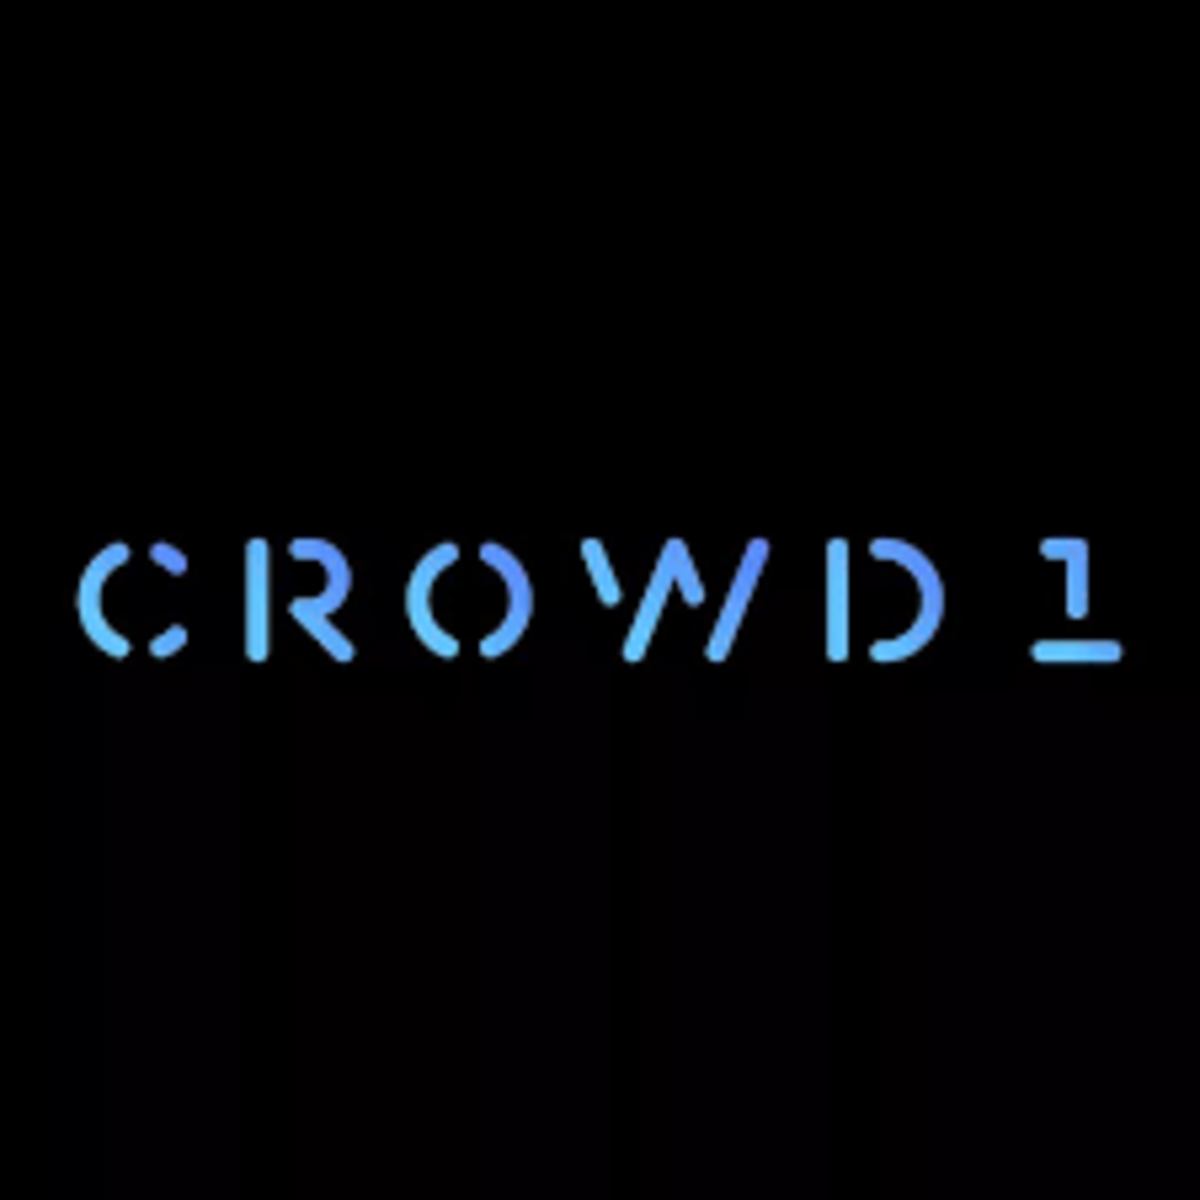 Crowd1 logo